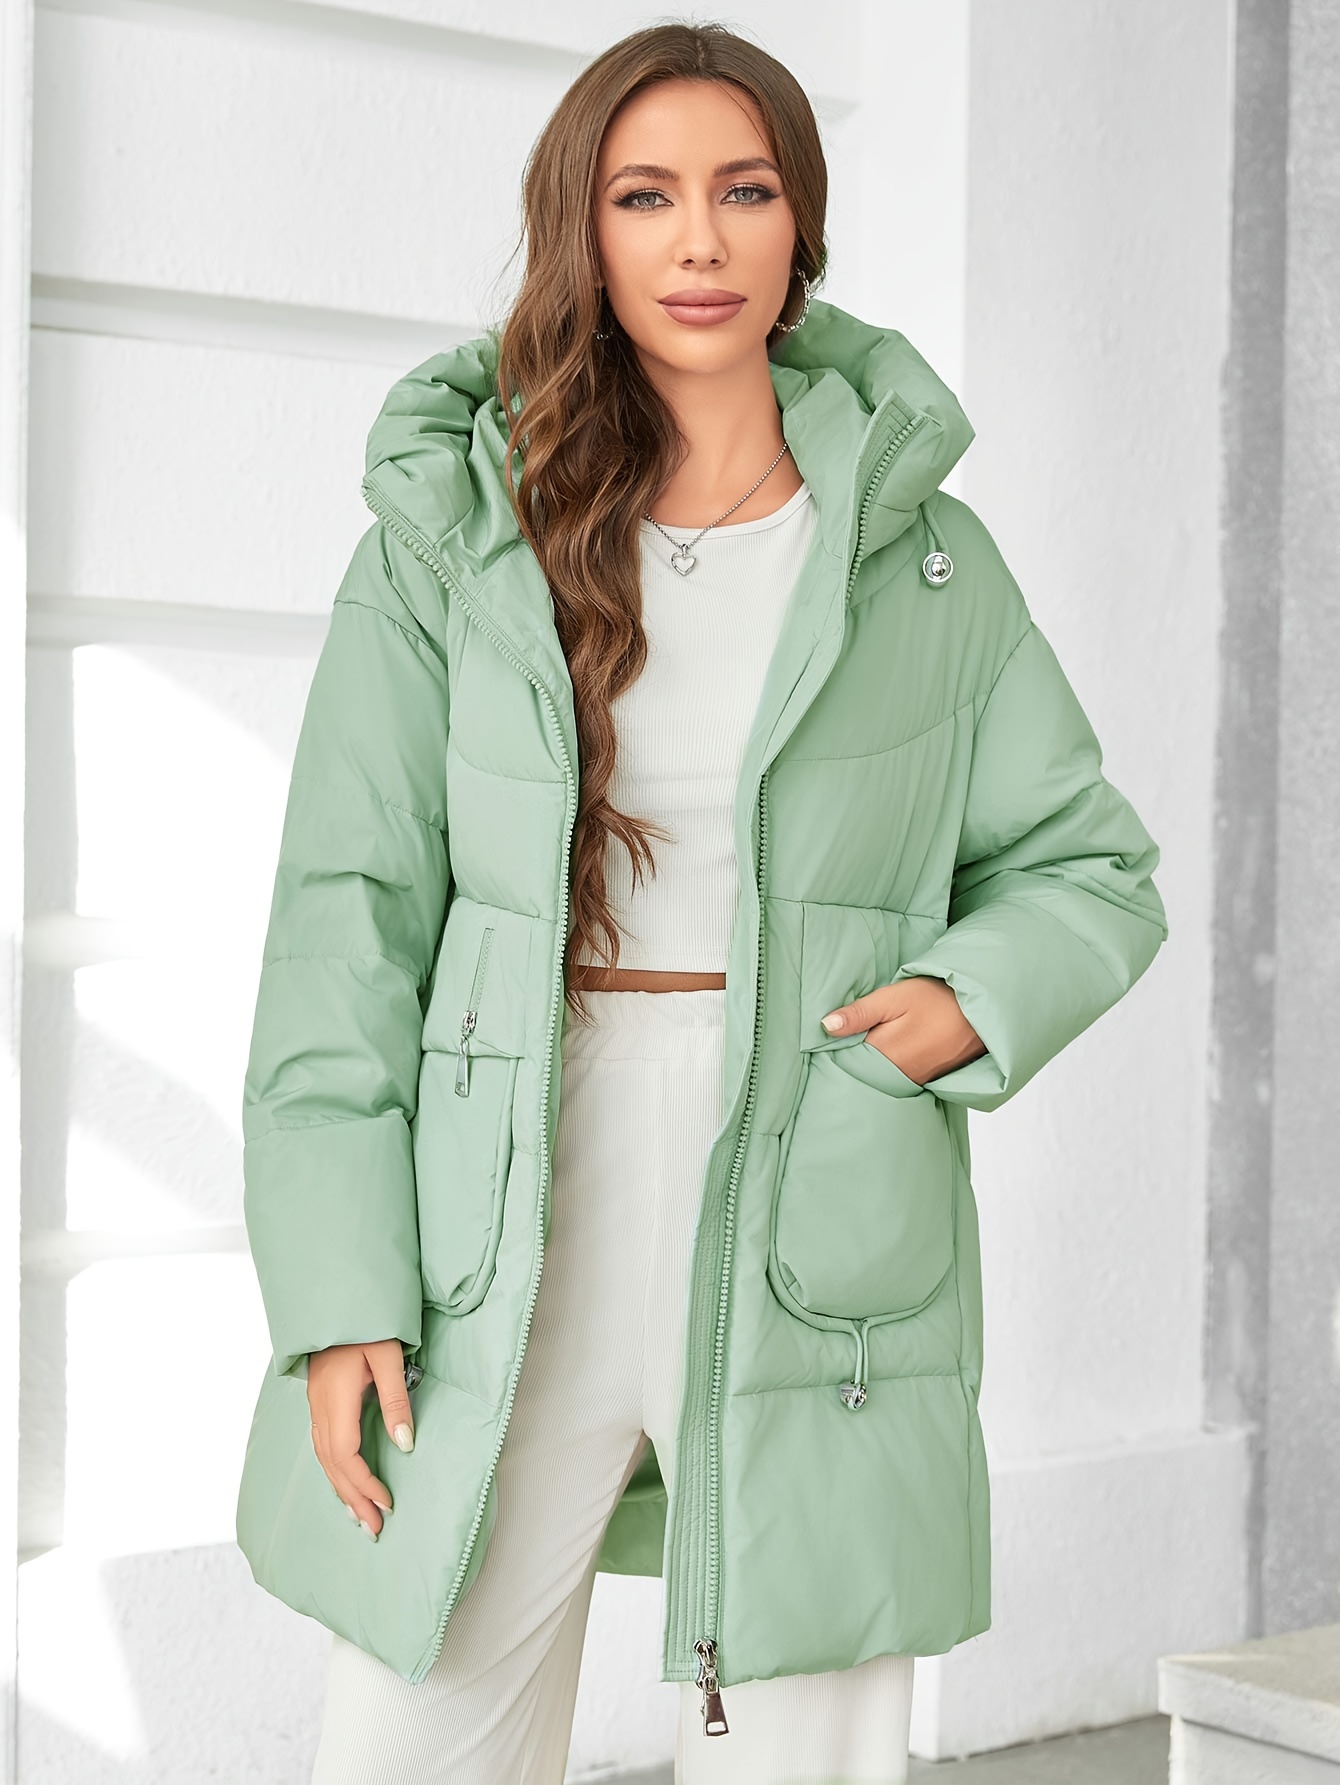 Womens Plus-Size Winter Coats